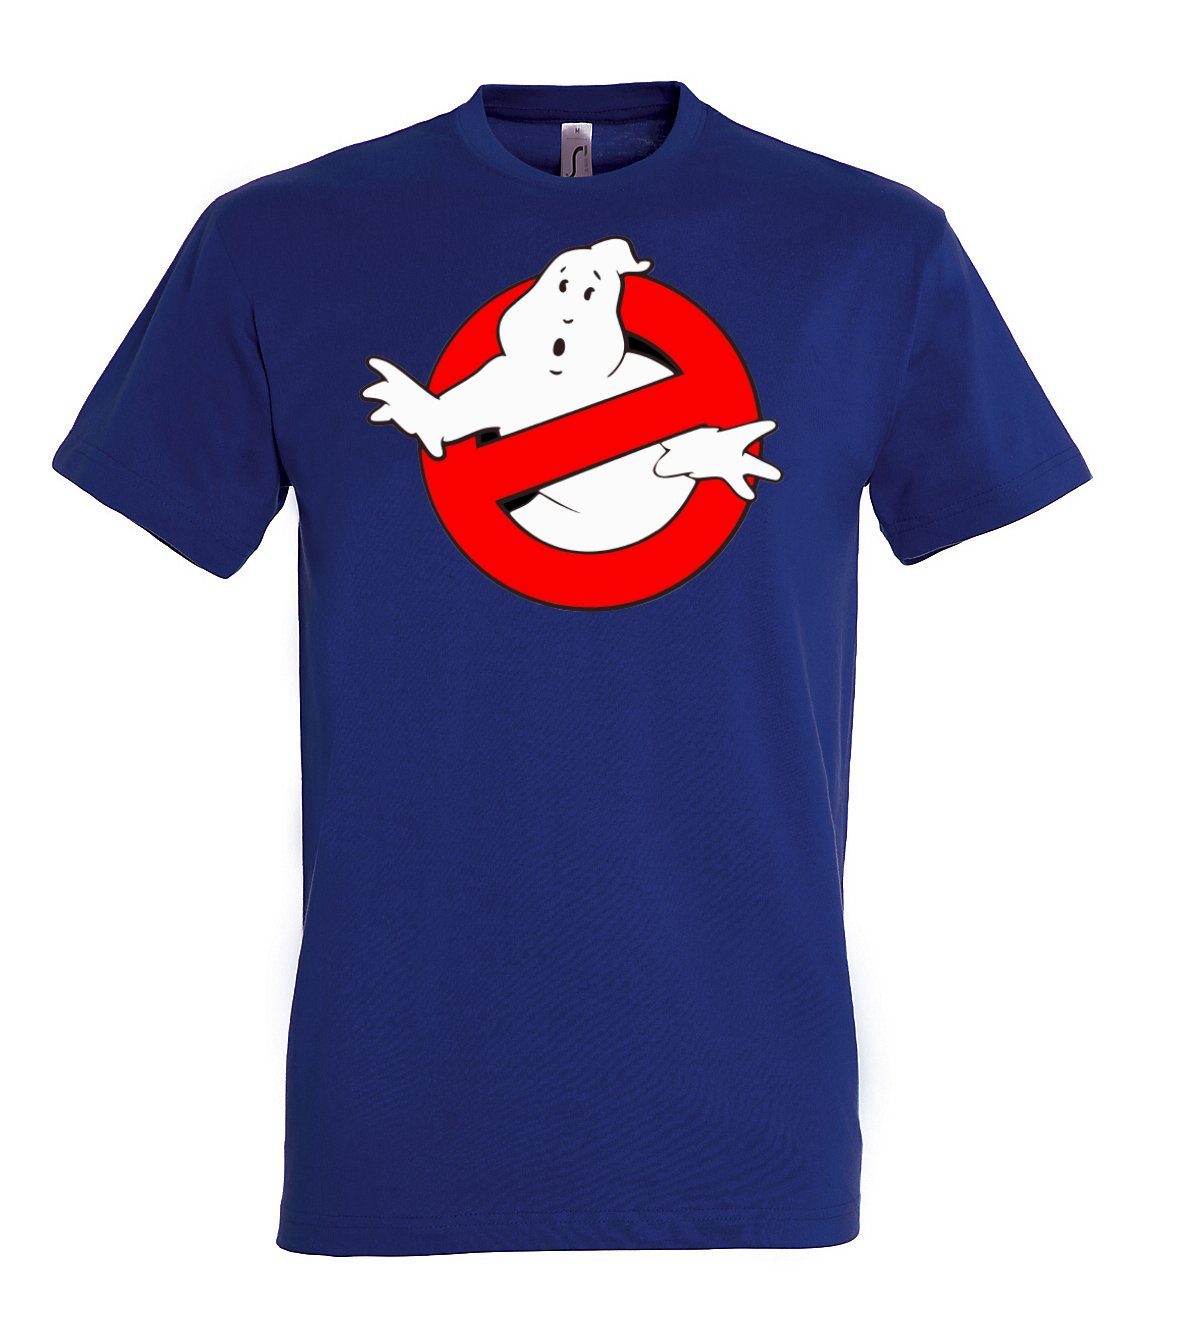 Navyblau Herren Youth T-Shirt Designz Ghostbusters Frontprint mit T-Shirt coolen